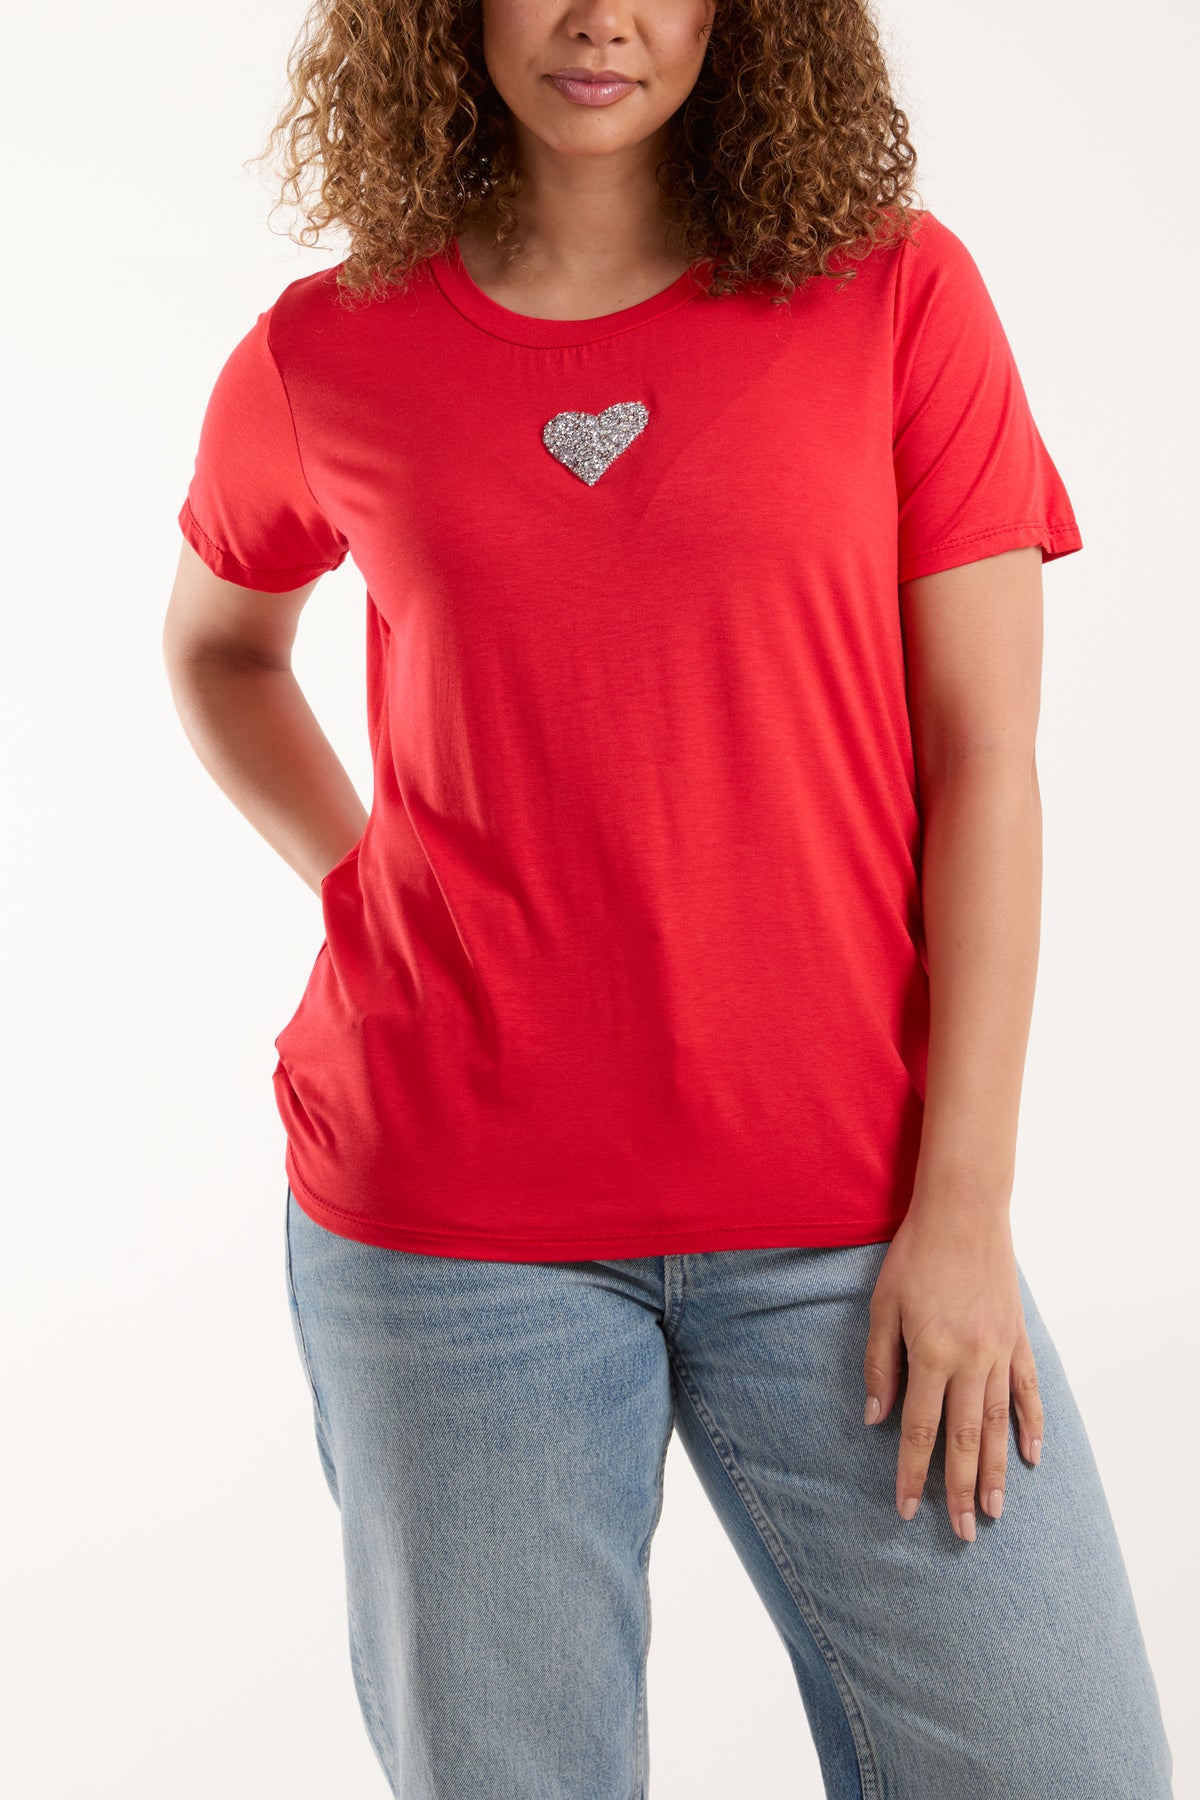 Appliqued Diamante Heart T-Shirt